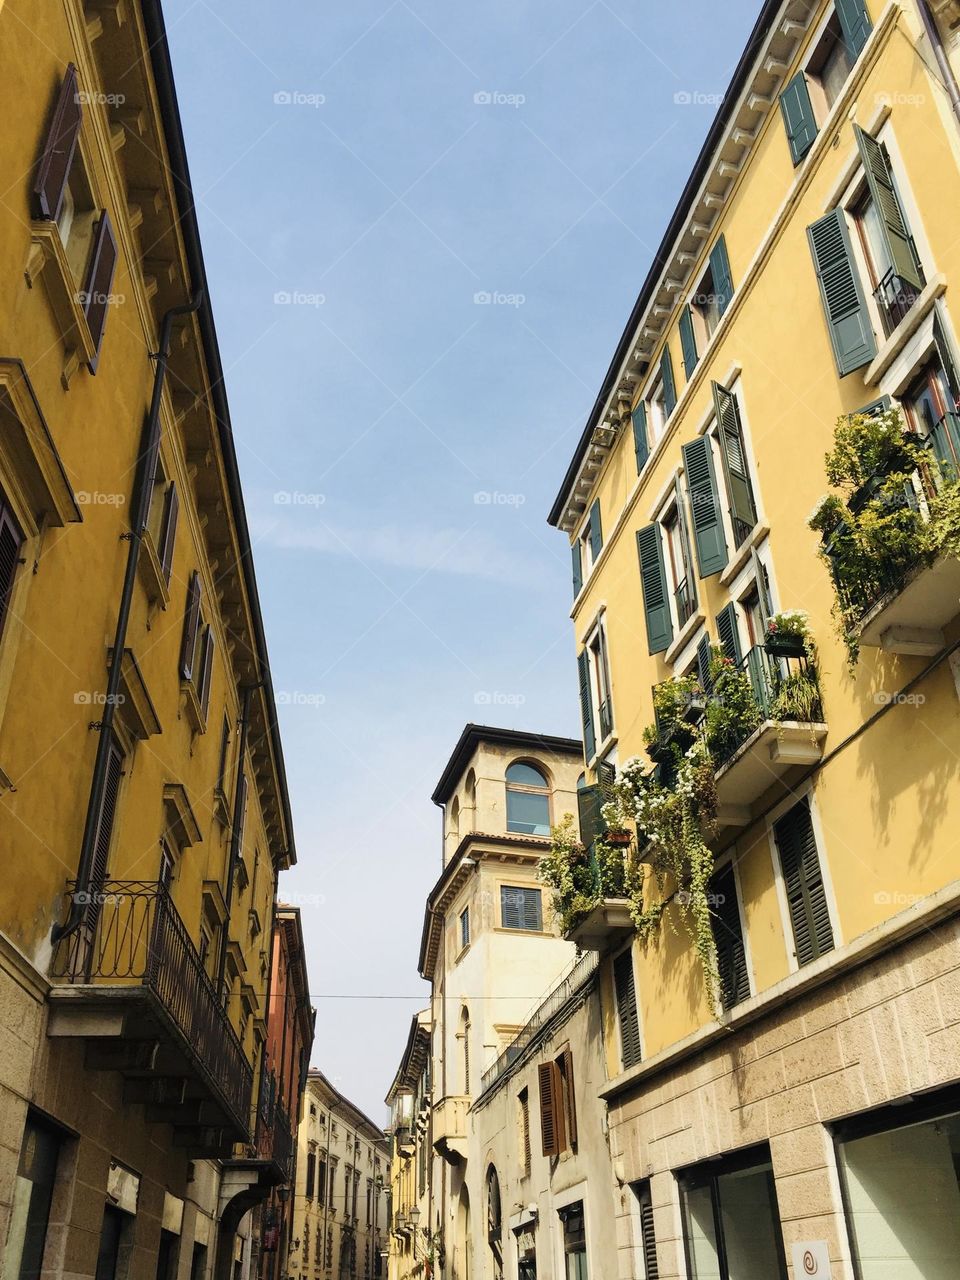 Through the streets of Verona